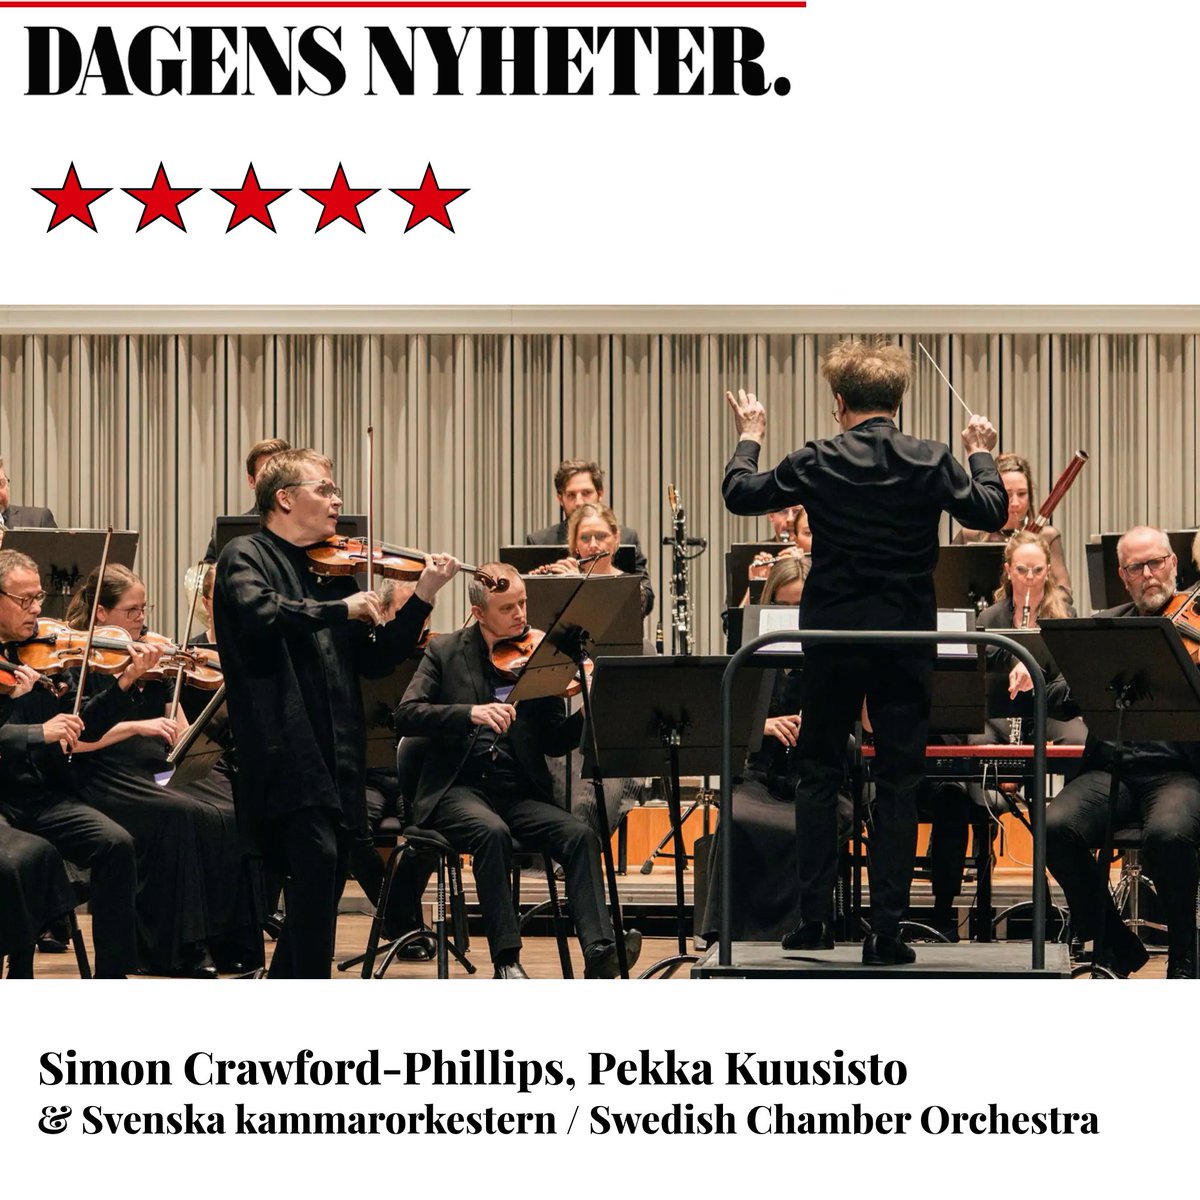 Fantastic ***** 5 star review in @dagensnyheter for Simon Crawford-Phillips & Pekka Kuusisto with Swedish Chamber Orchestra for their latest performance. dn.se/kultur/djuro-z…